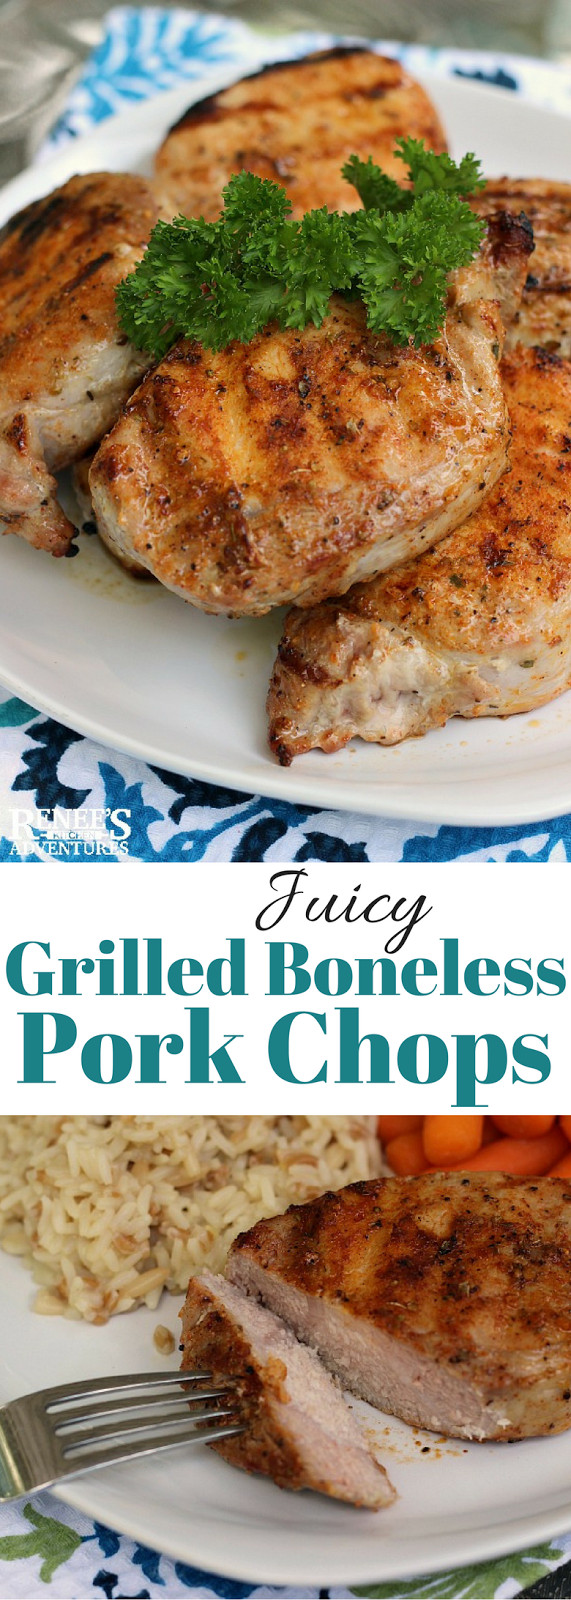 Grill Boneless Pork Chops
 Juicy Grilled Boneless Pork Chops